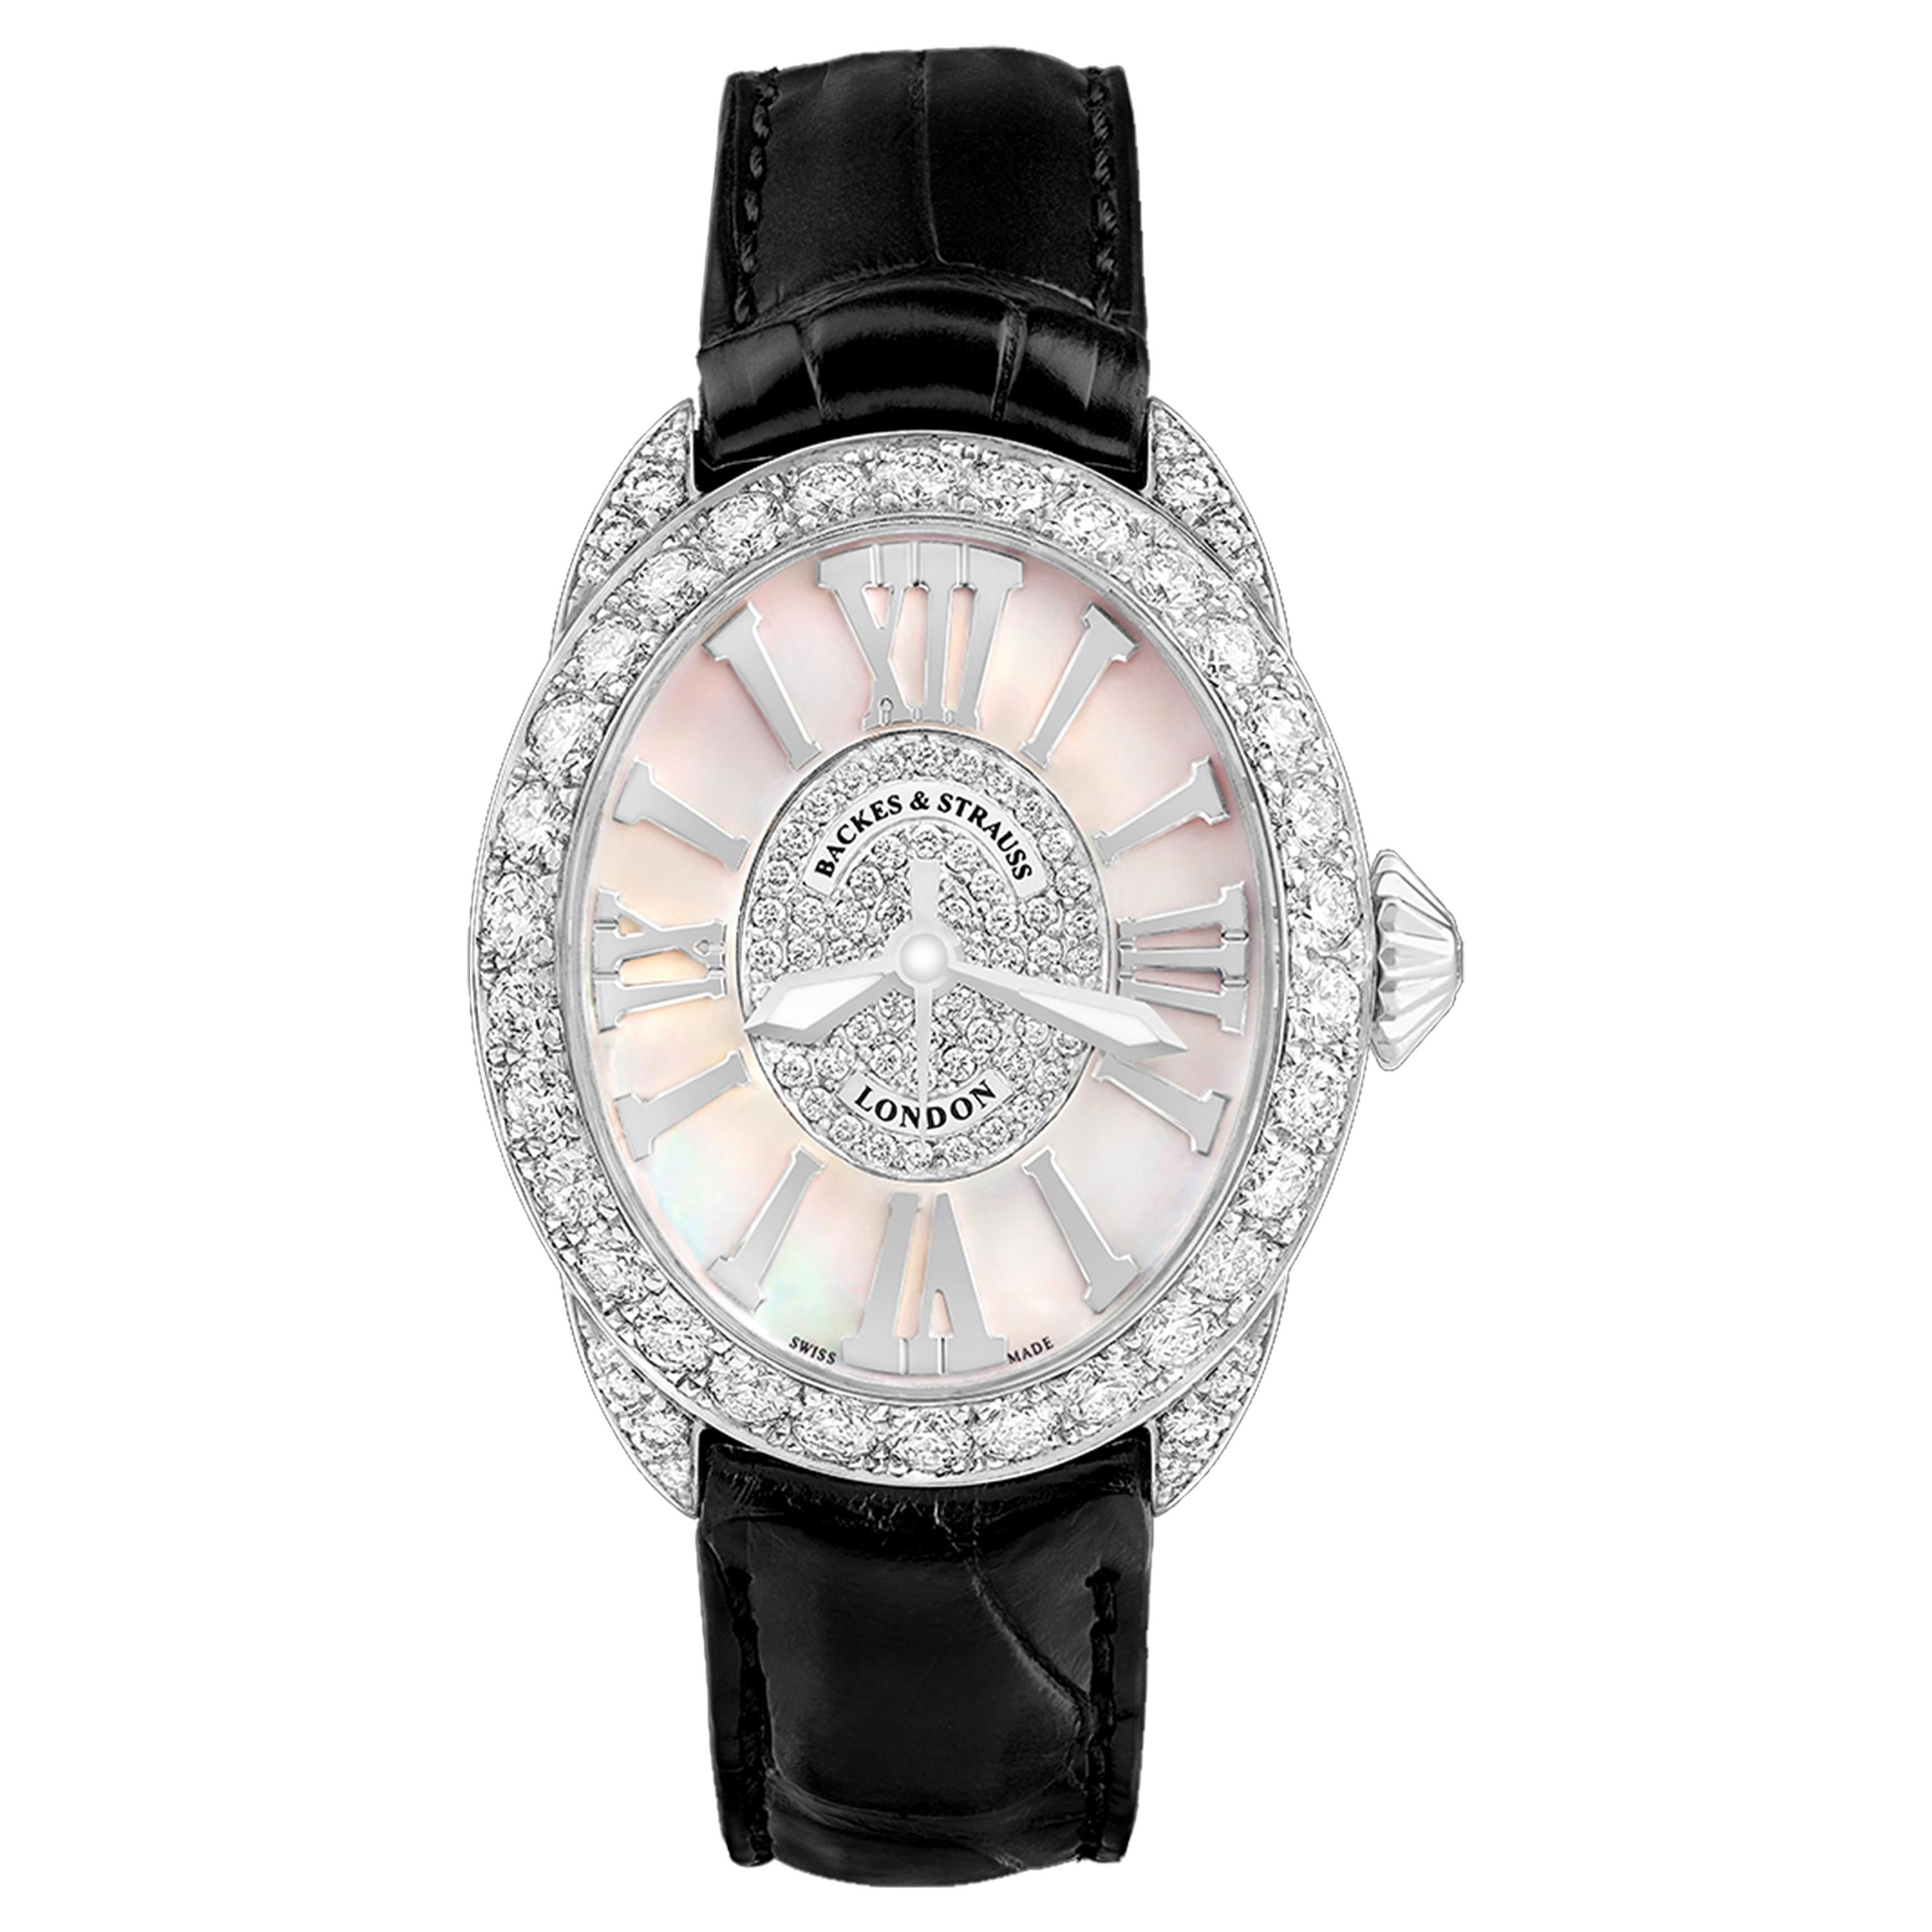 Regent 3238 Luxury Diamond Watch for Women, White Gold